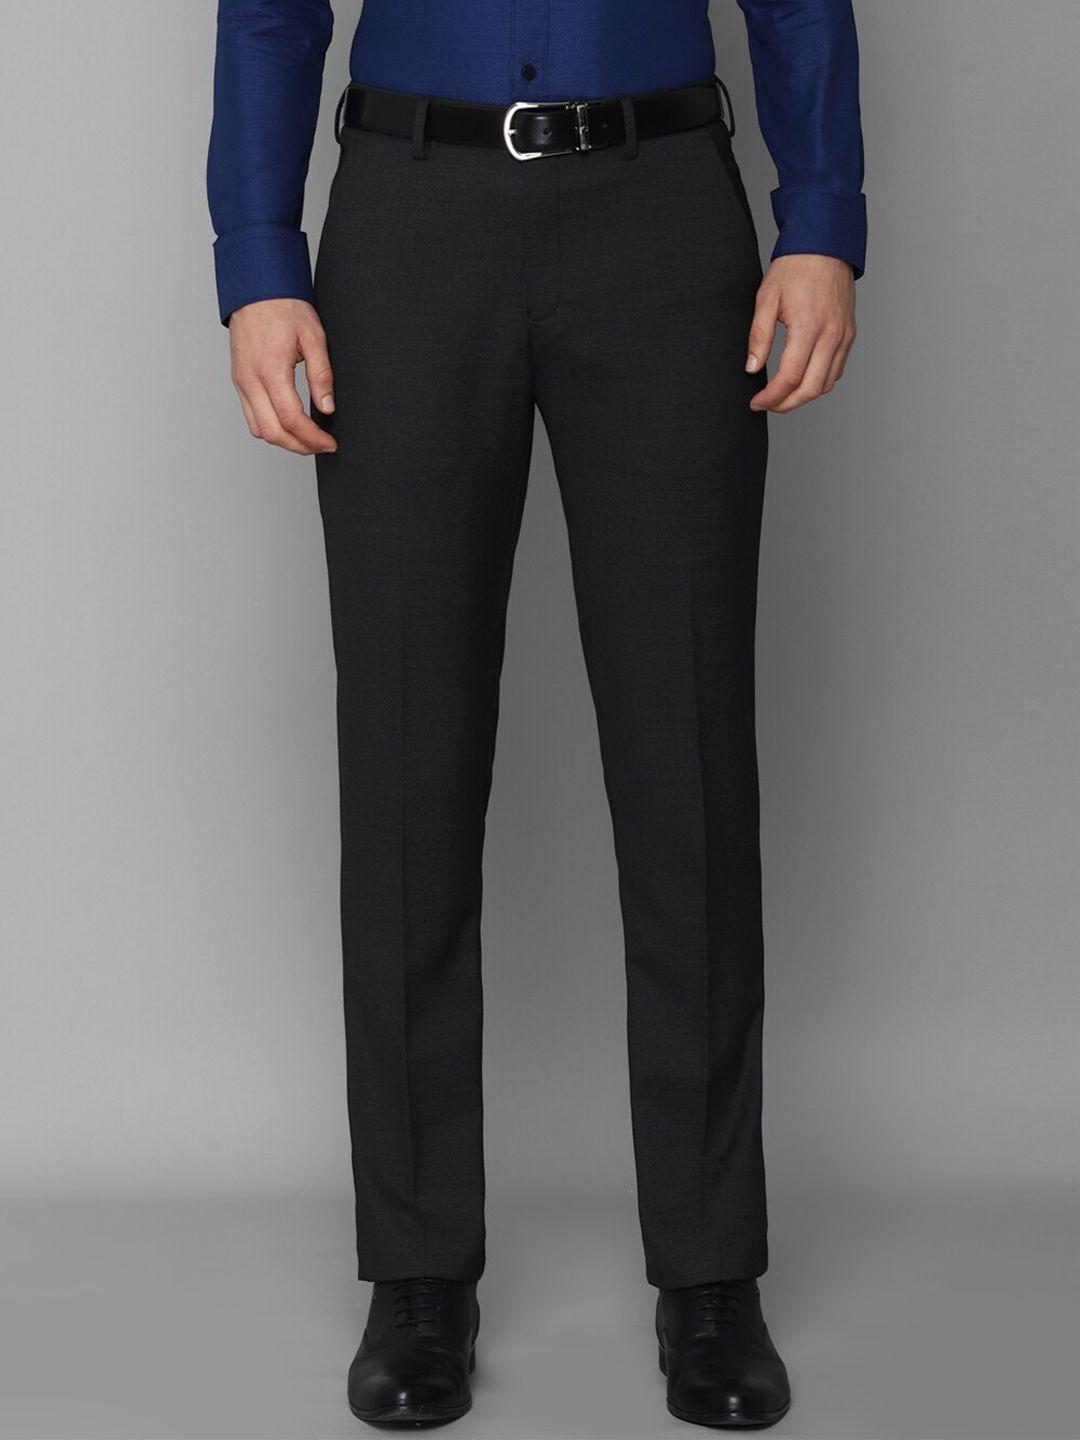 louis-philippe-men-slim-fit-mid-rise-formal-trouser